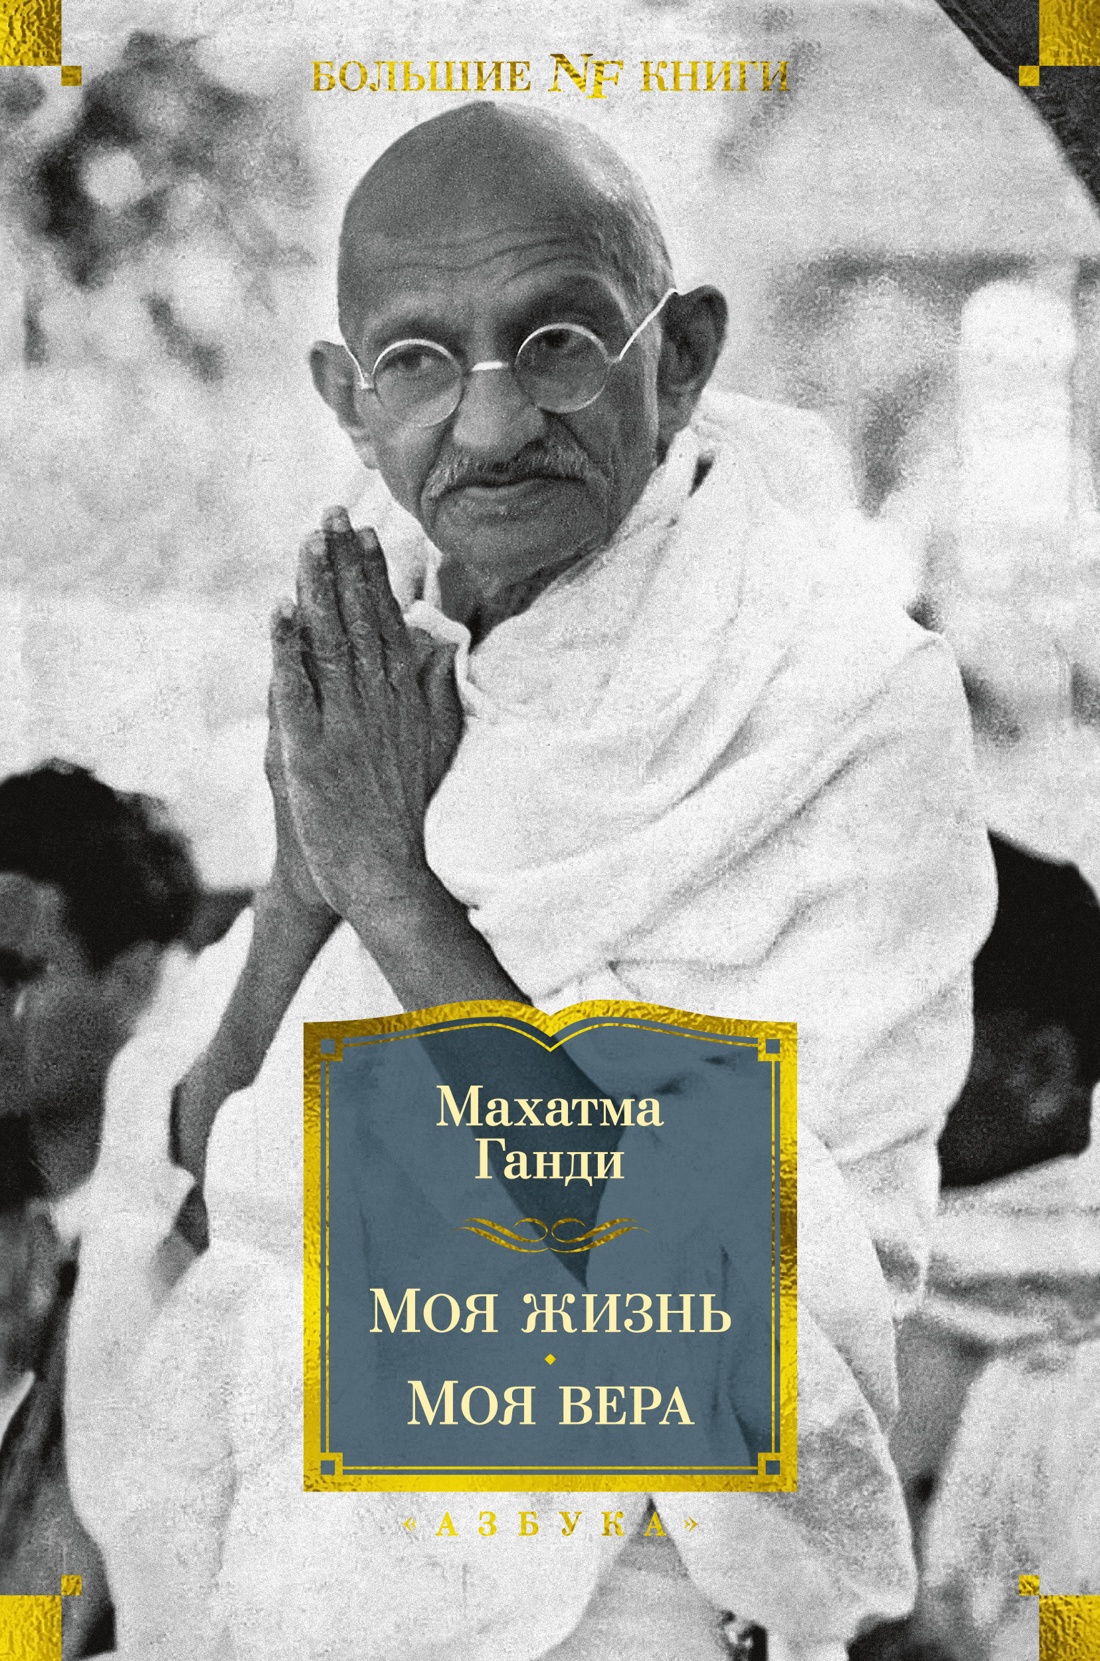 ганди махатма моя вера Ганди Махатма Моя жизнь. Моя вера